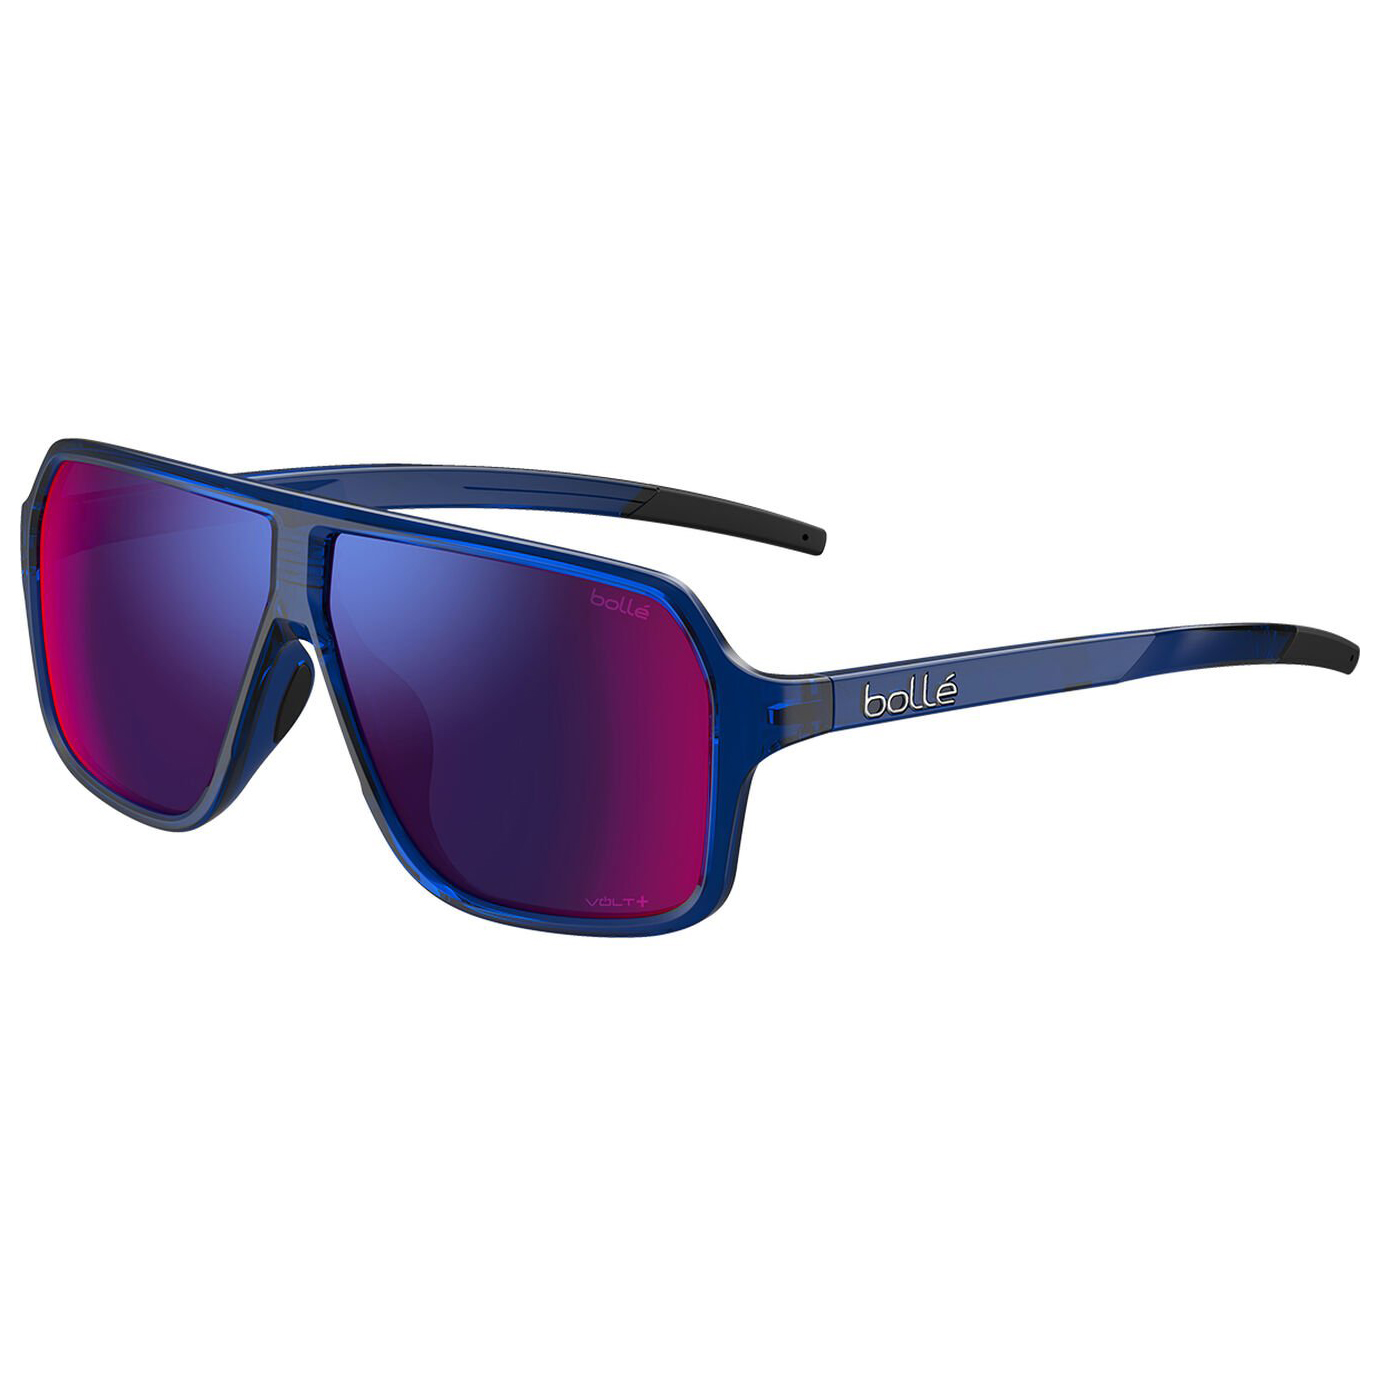 Солнцезащитные очки Bollé Prime Polarized S3 (VLT 16%), цвет Navy Crystal Shiny очки солнцезащитные stylemark polarized l2480d